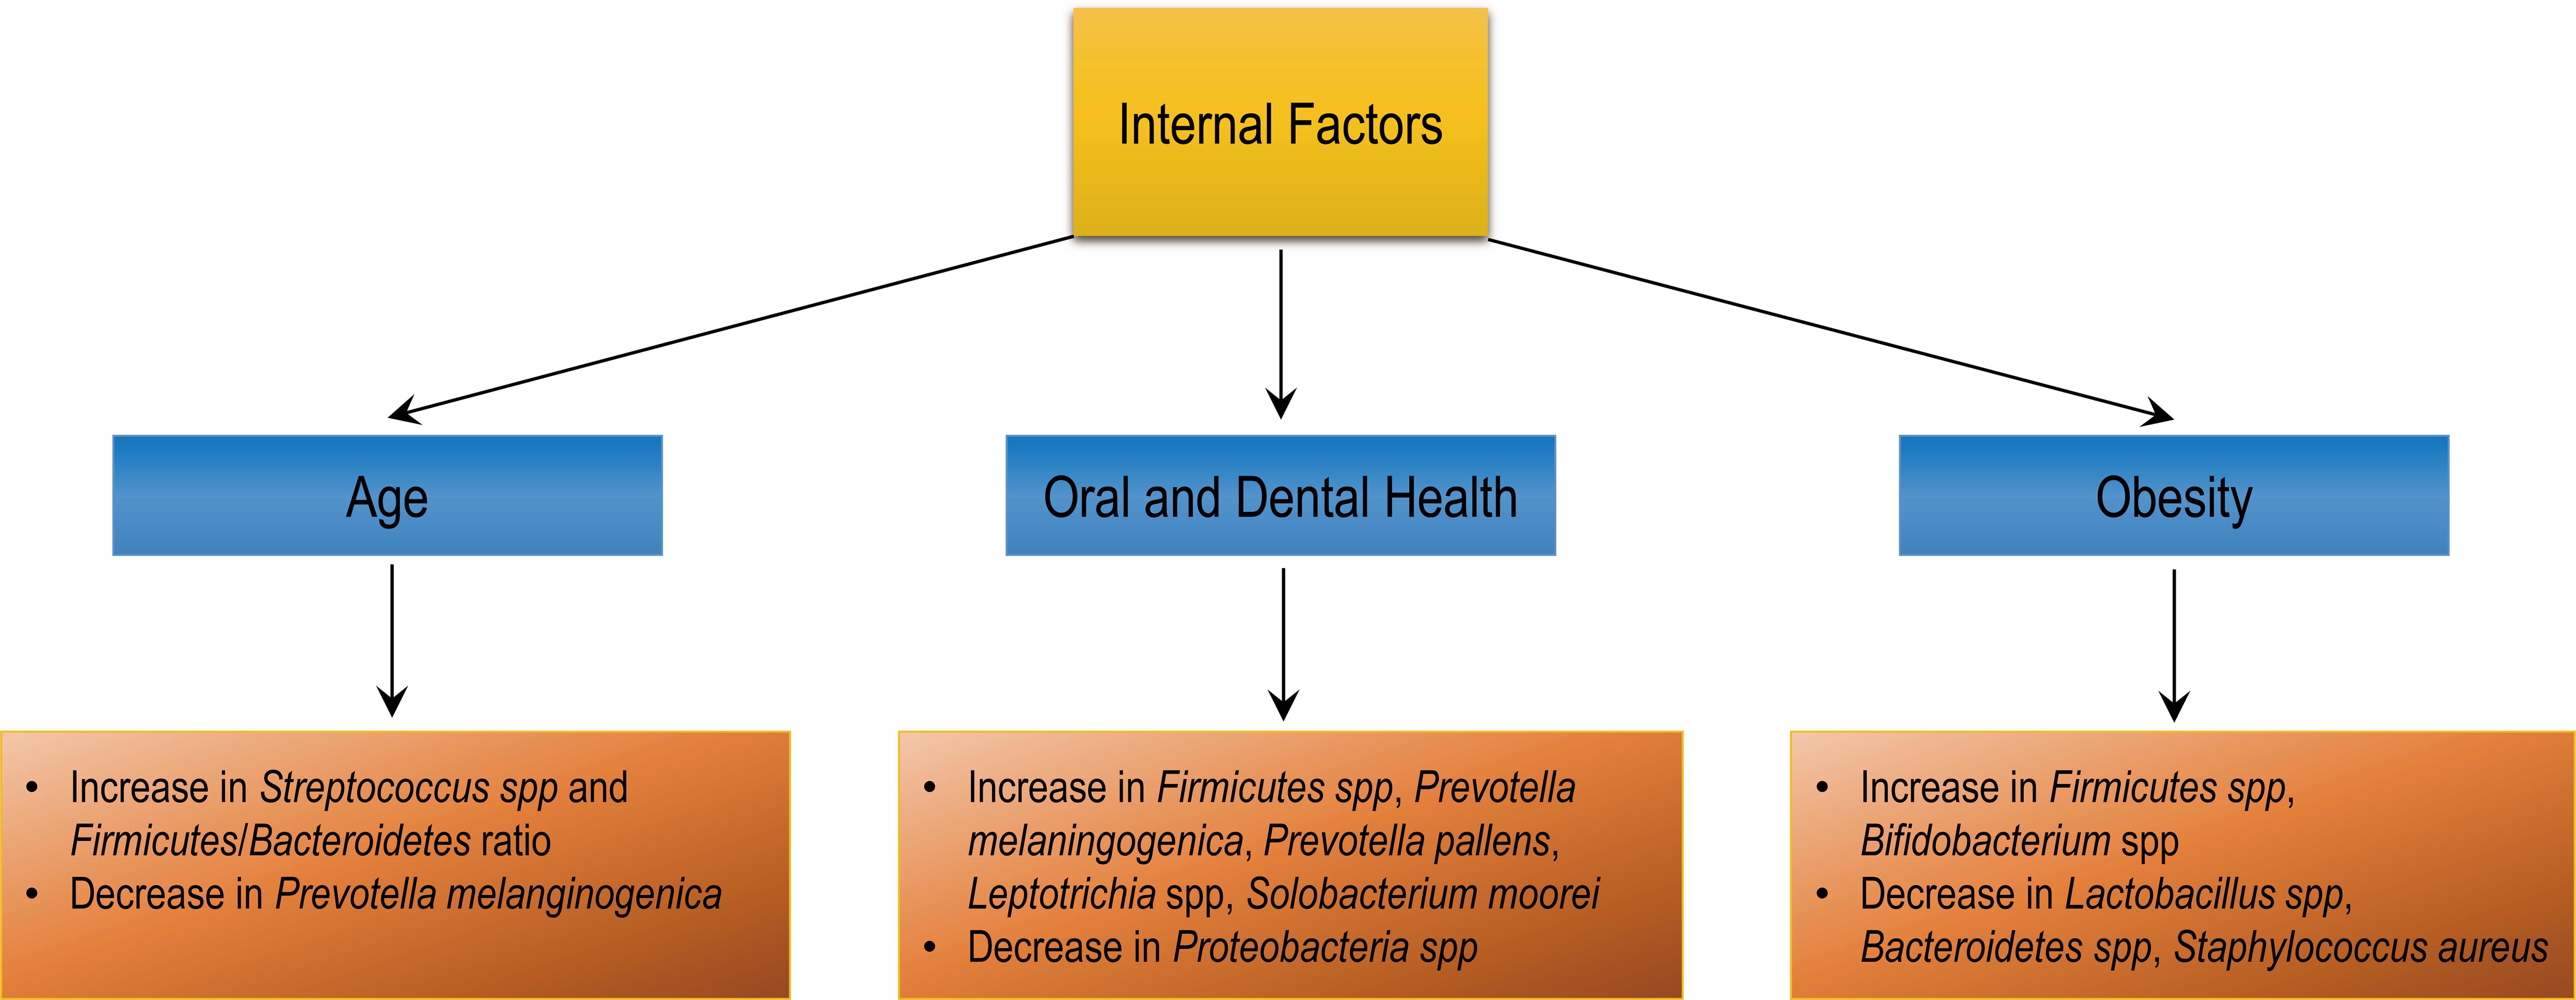 Internal factors that influence esophageal disease.